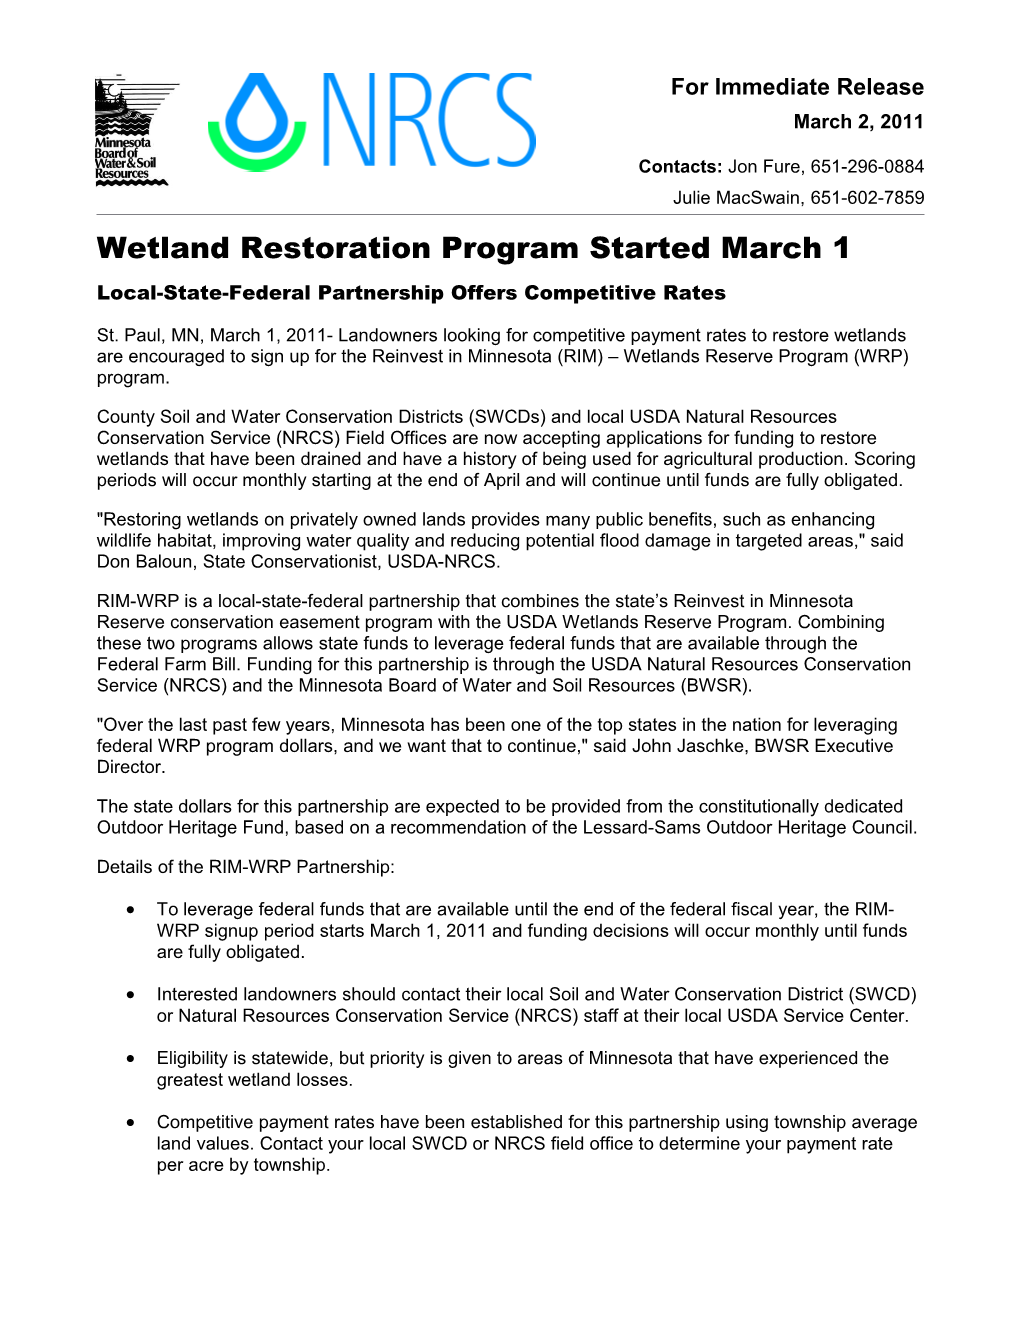 Wetland Restoration Opportunity Through USDA and BWSR